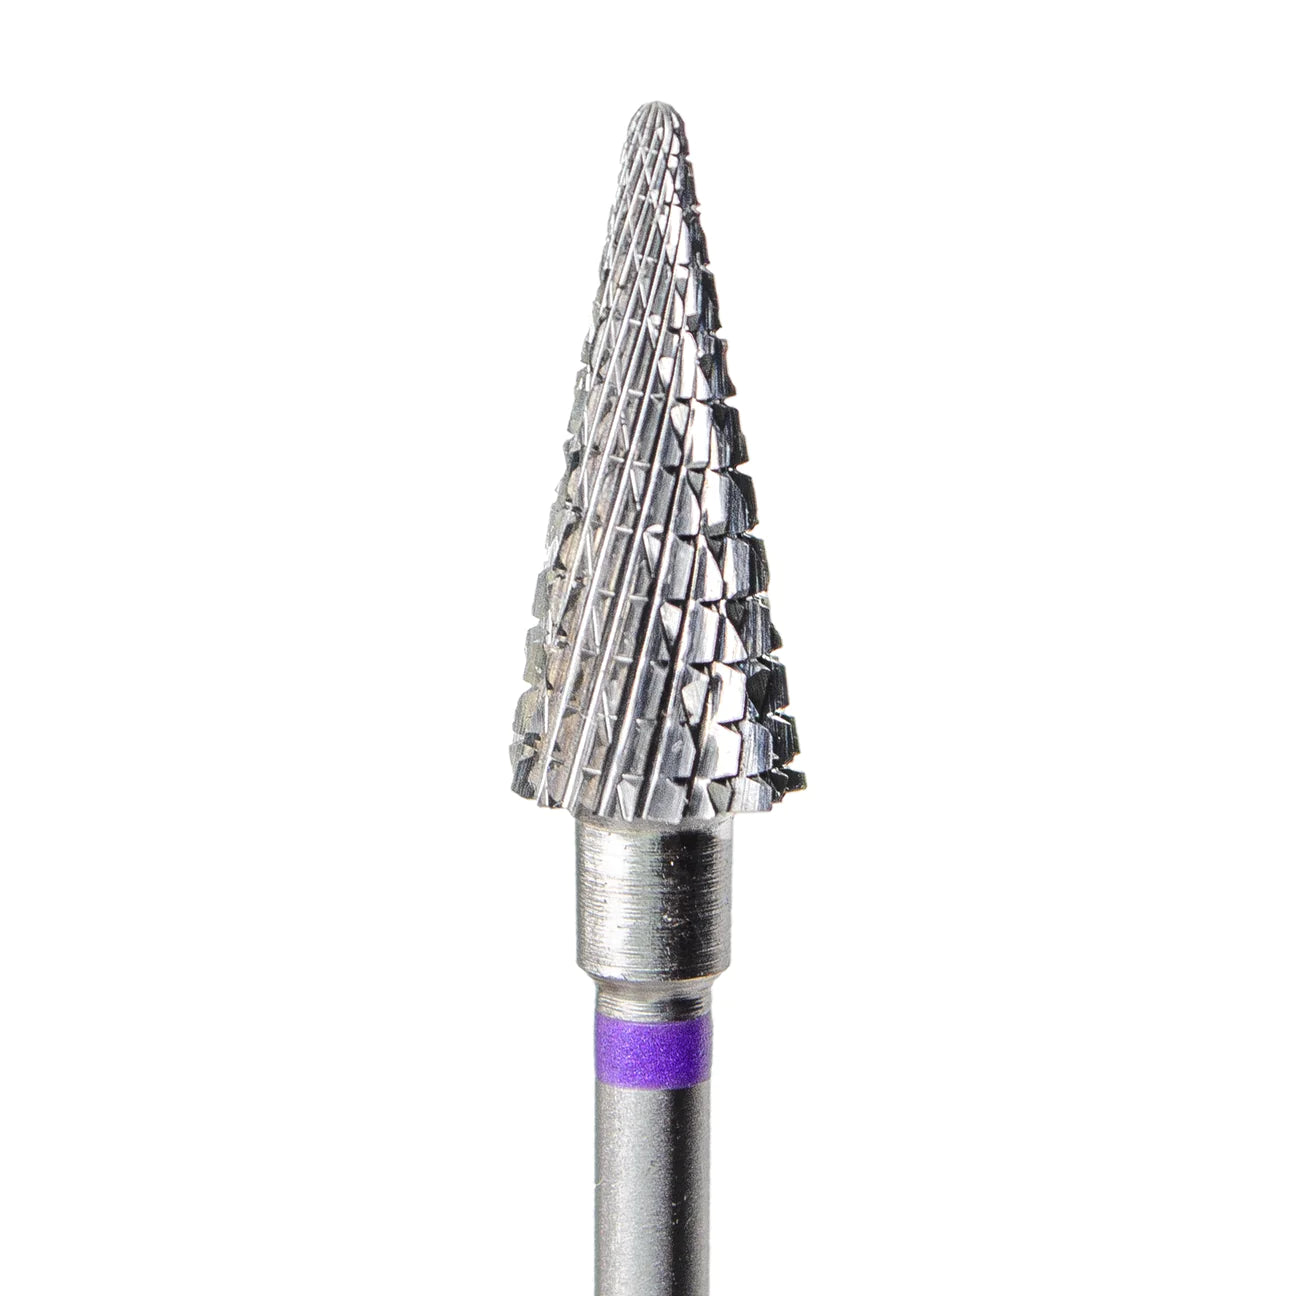 KMIZ Tungsten Carbide Cone E-File Nail Bit, 6.0mm, Purple